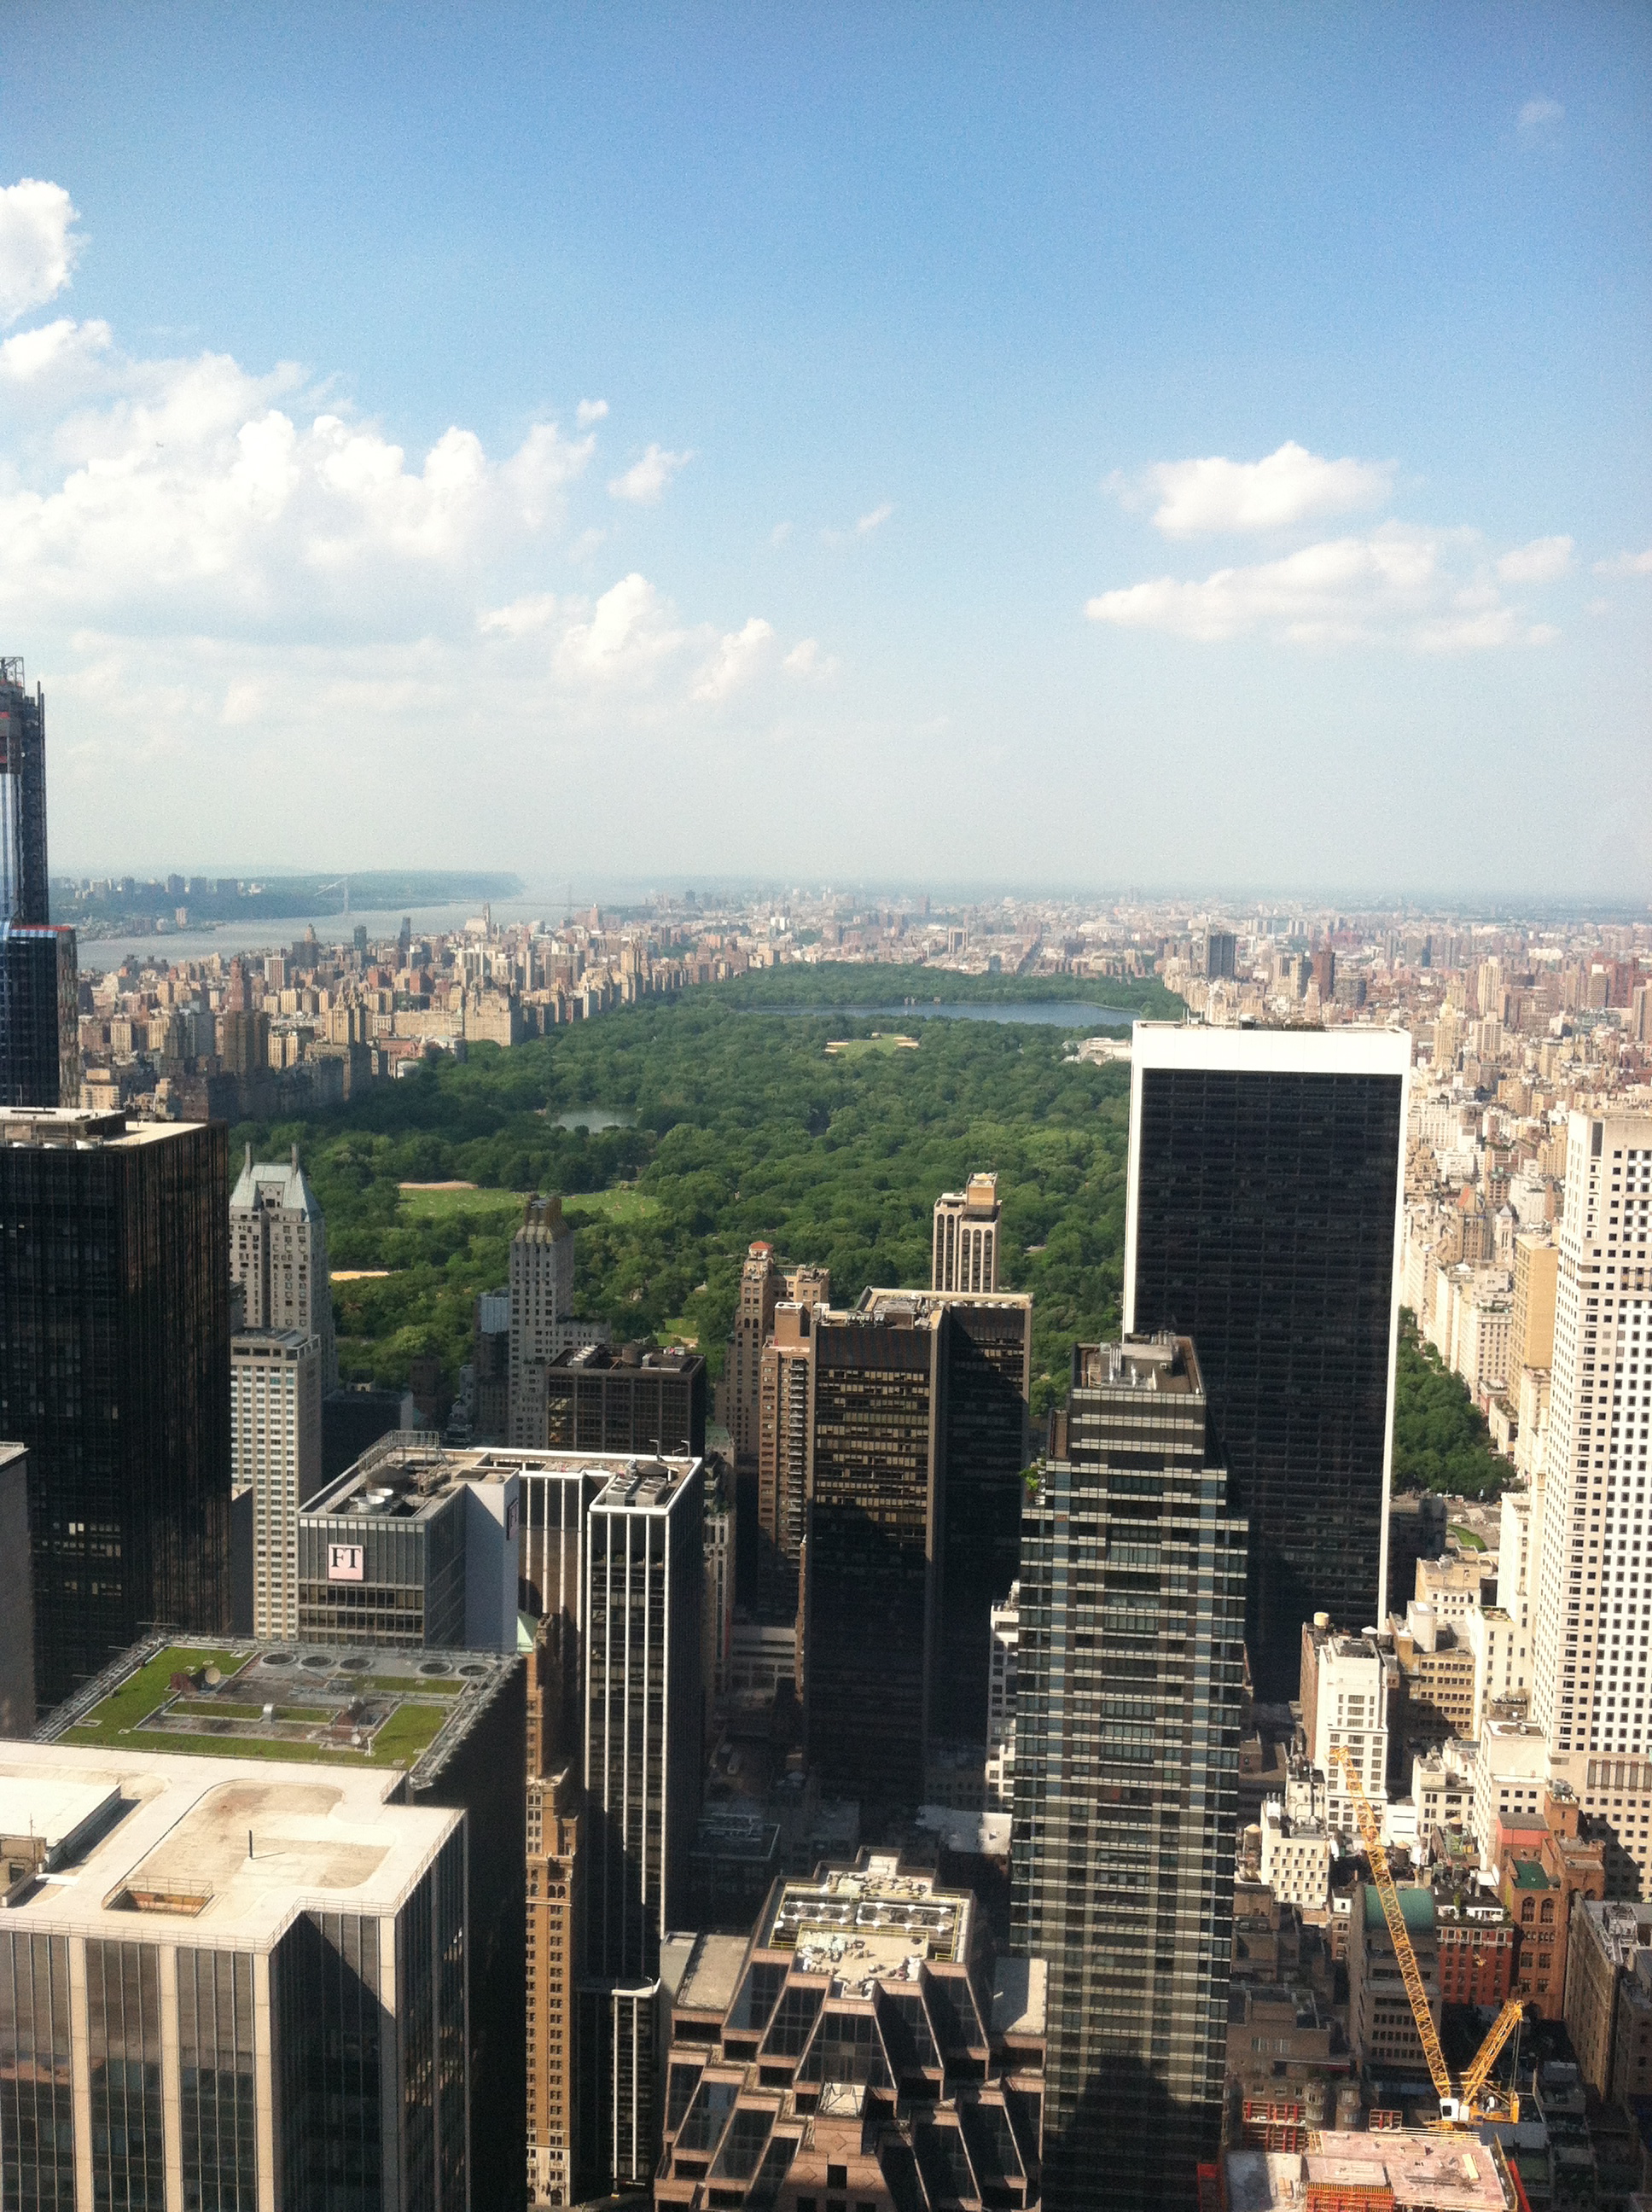 New York Day 3 June 1, 2013 1151